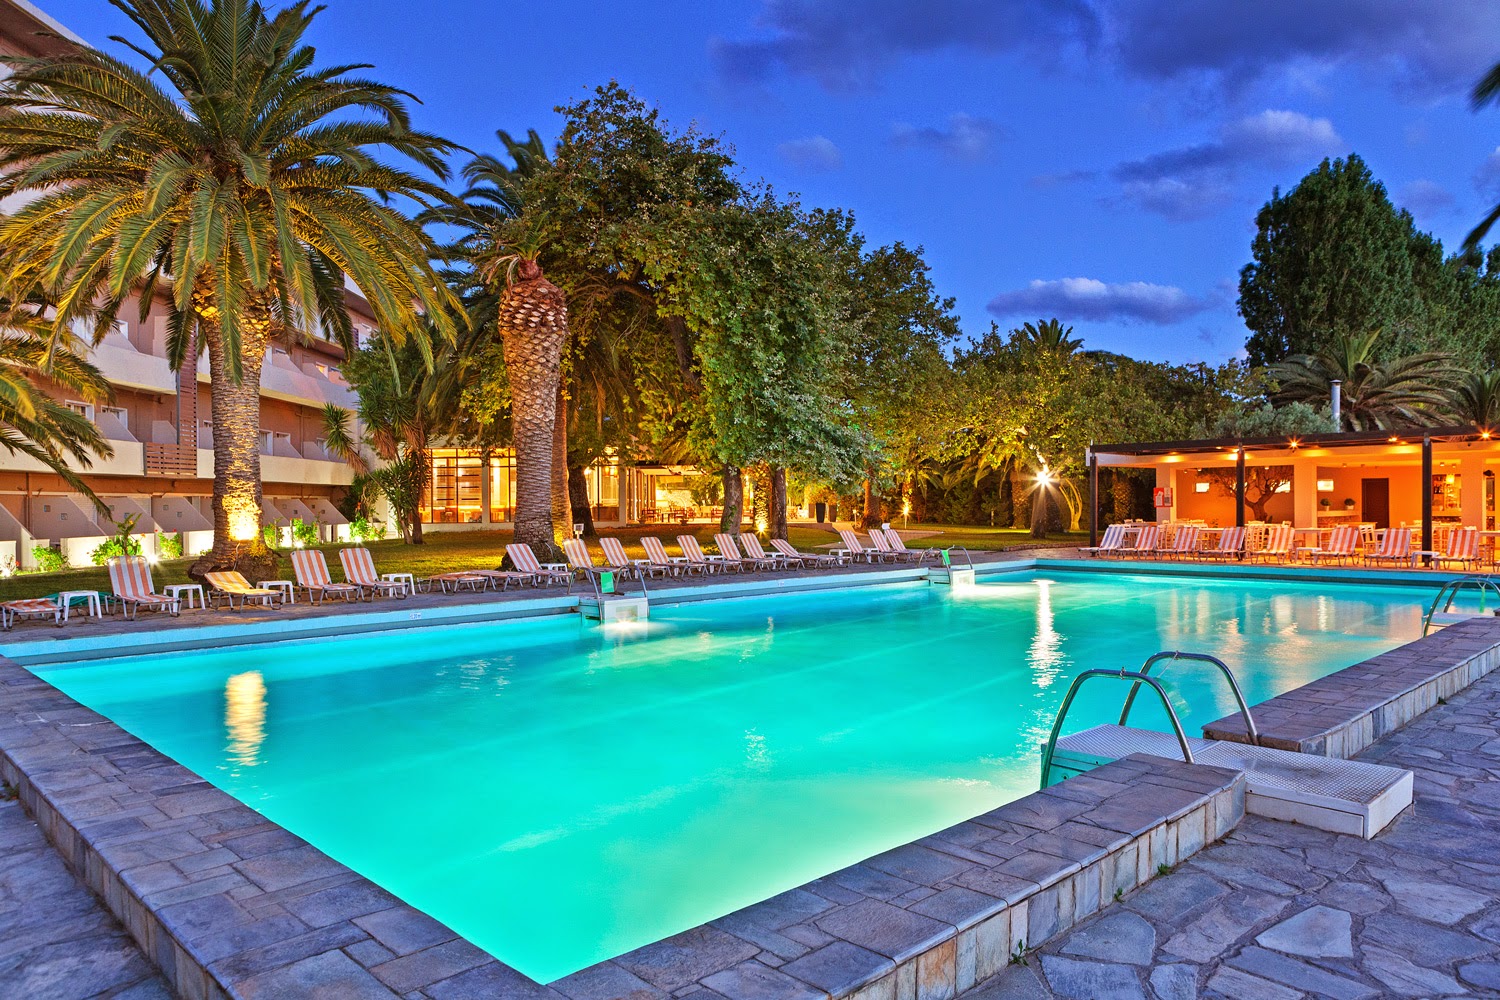 4* Long Beach Resort Hotel - Αίγιο ✦ -40% ✦ 4 Ημέρες (3 Διανυκτερεύσεις) ✦ 2 άτομα + 1 παιδί έως 12 ετών ✦ 12 ✦ 01/08/2023 έως 31/08/2023 ✦ Μπροστά στην Παραλία!